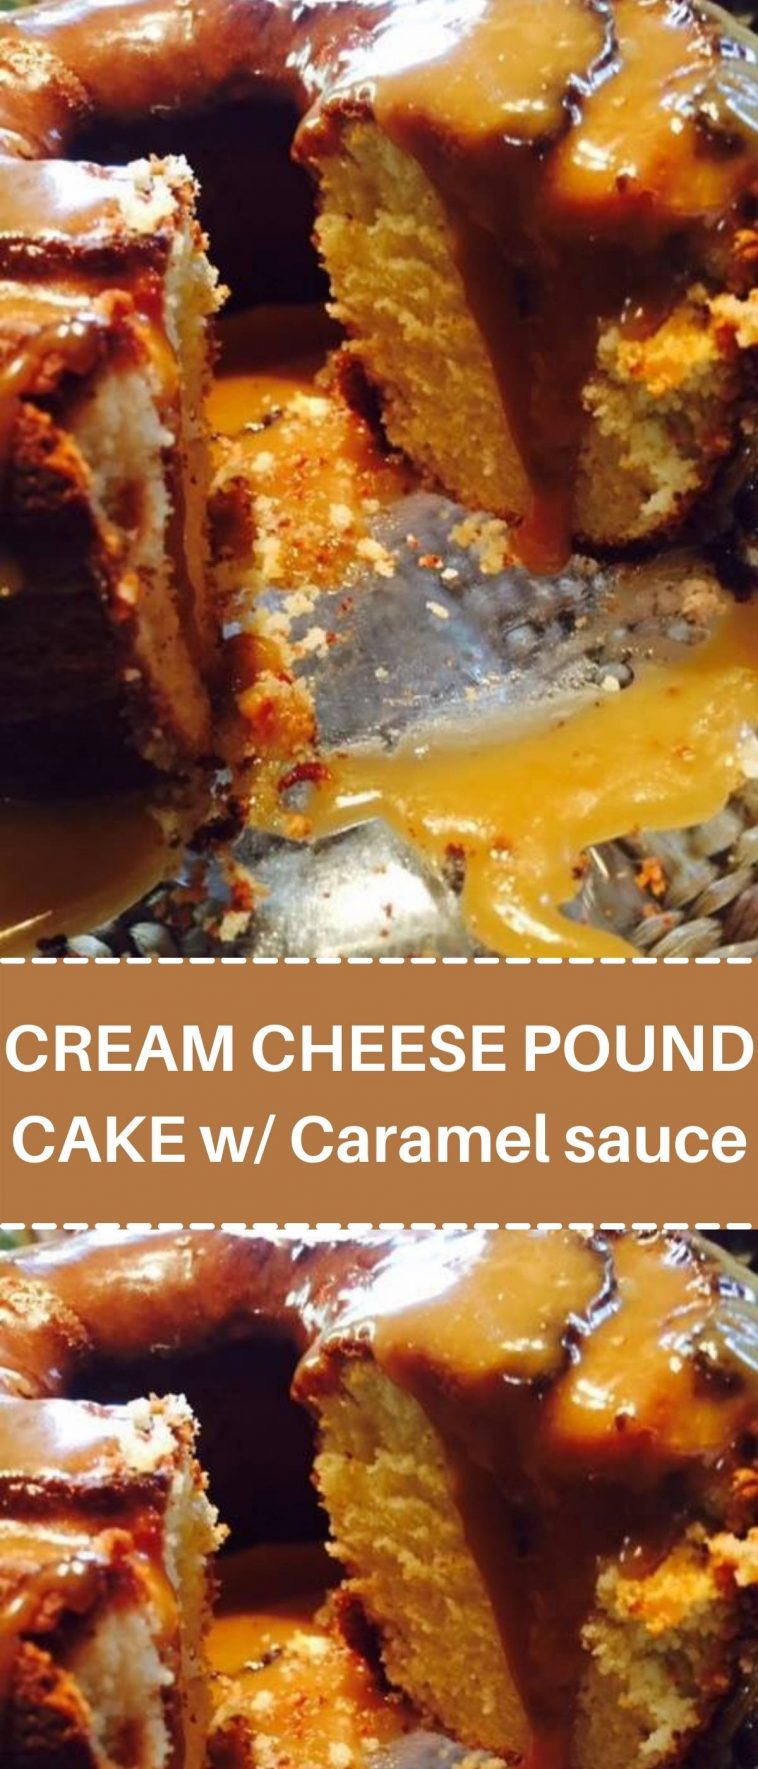 CREAM CHEESE POUND CAKE w/ Caramel sauce